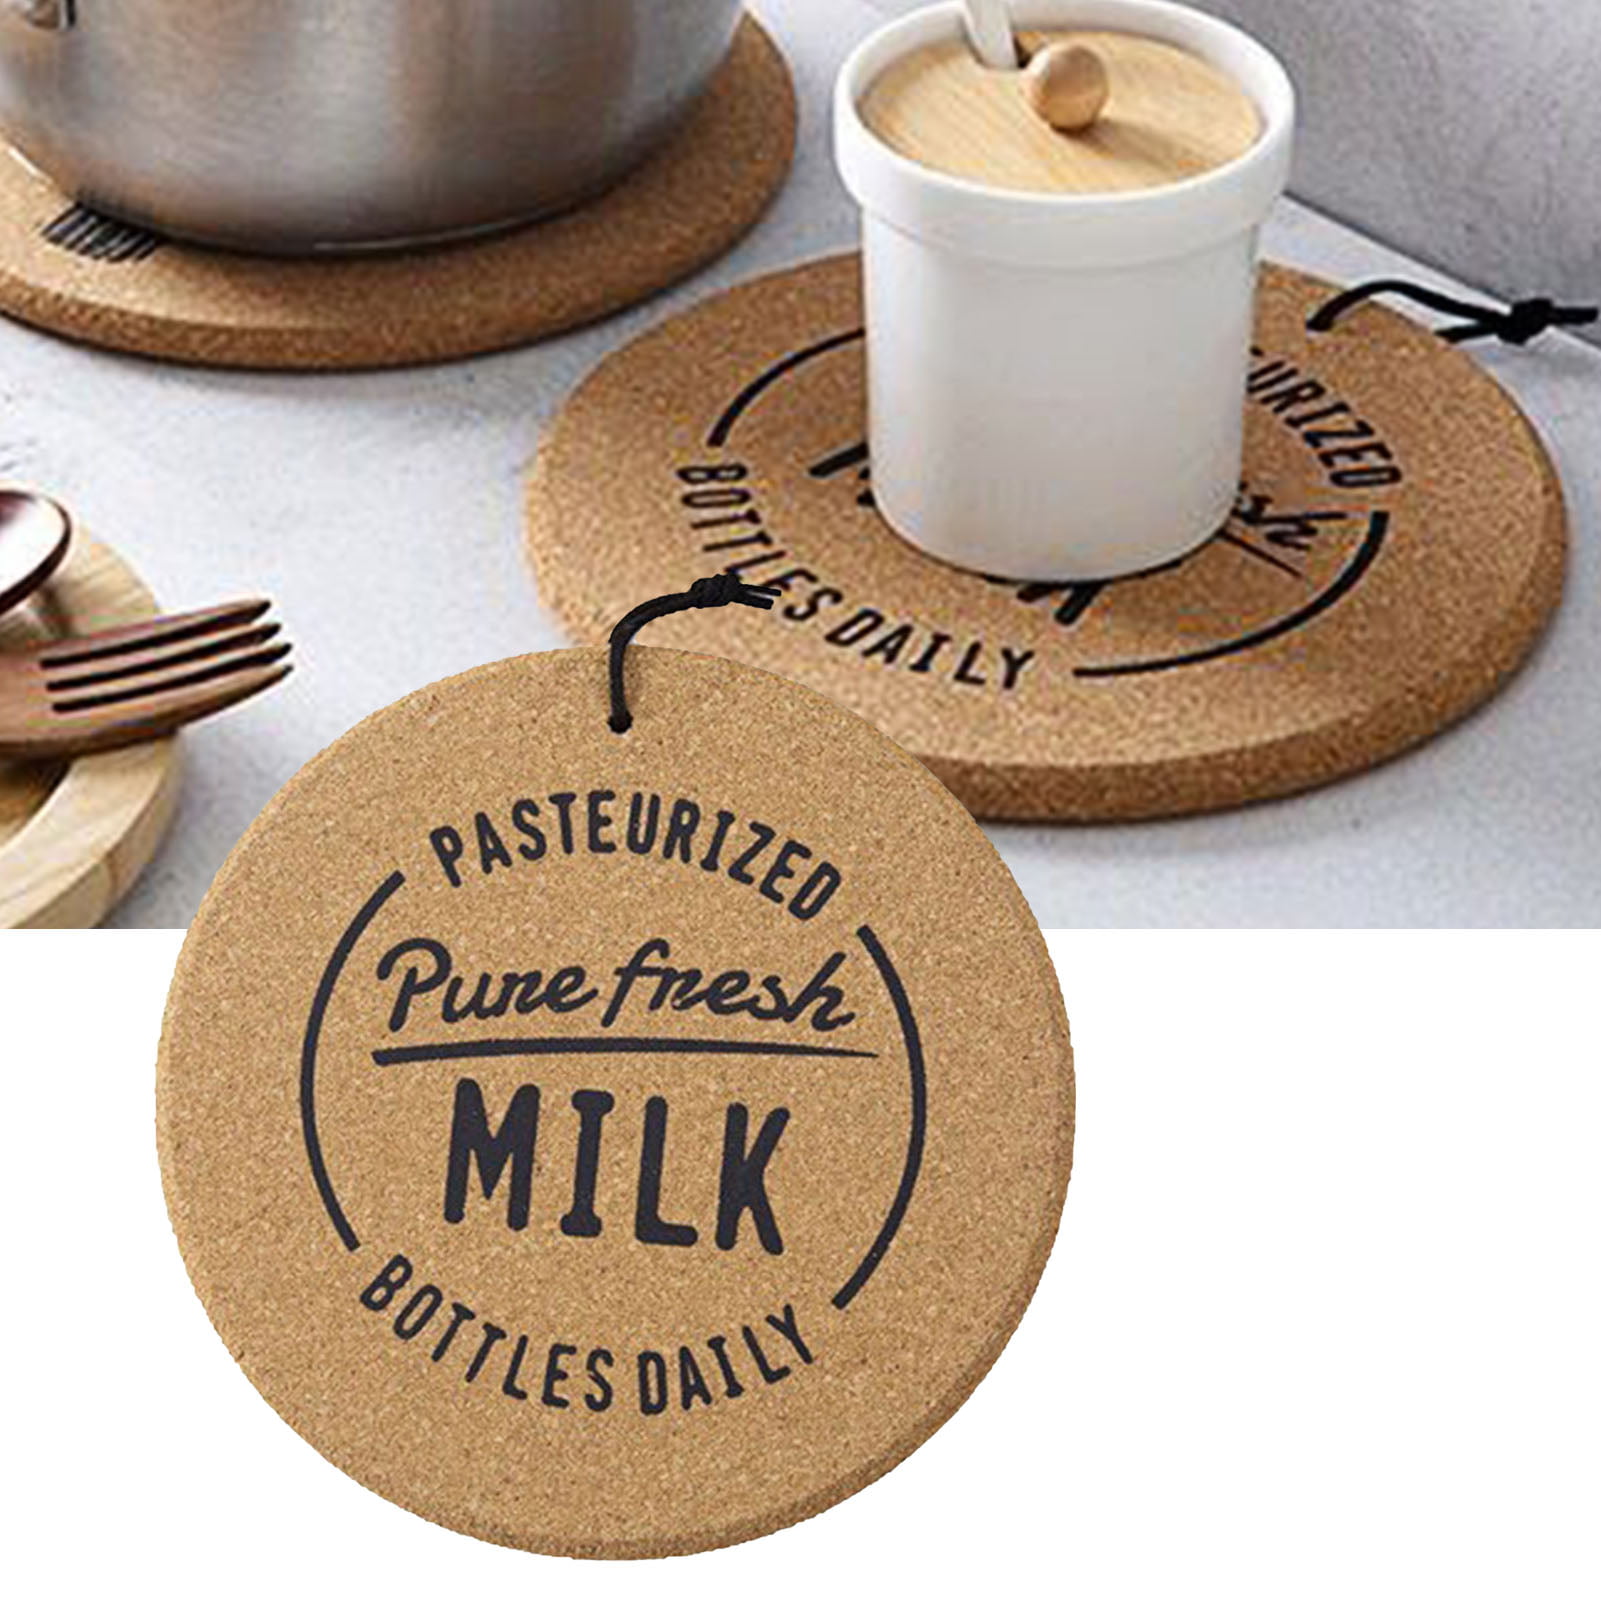 Minimalism Round Heat Insulation Table Mug Mat Pad Placemat Non-slip Coasters